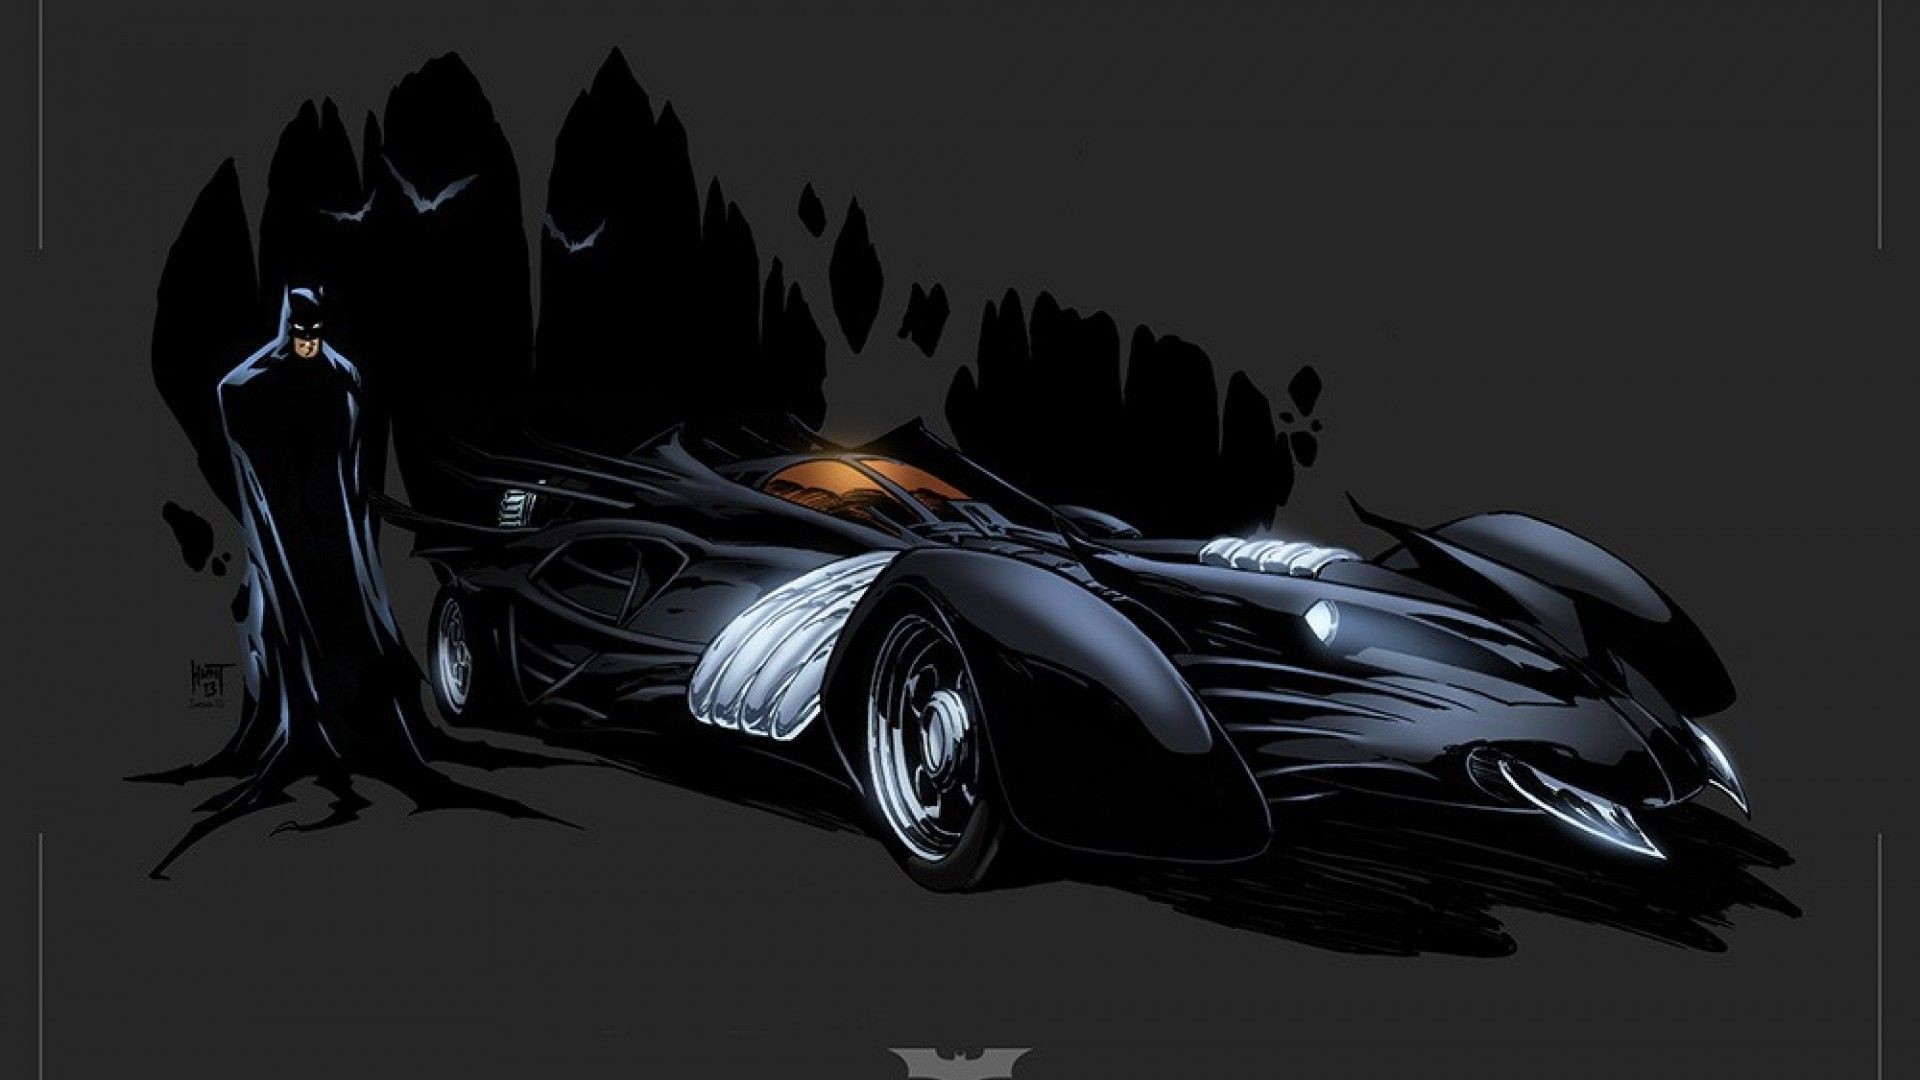 1920x1080 fondo de pantalla móvil,hombre murciélago,coche,vehículo,personaje de ficción,auto concepto